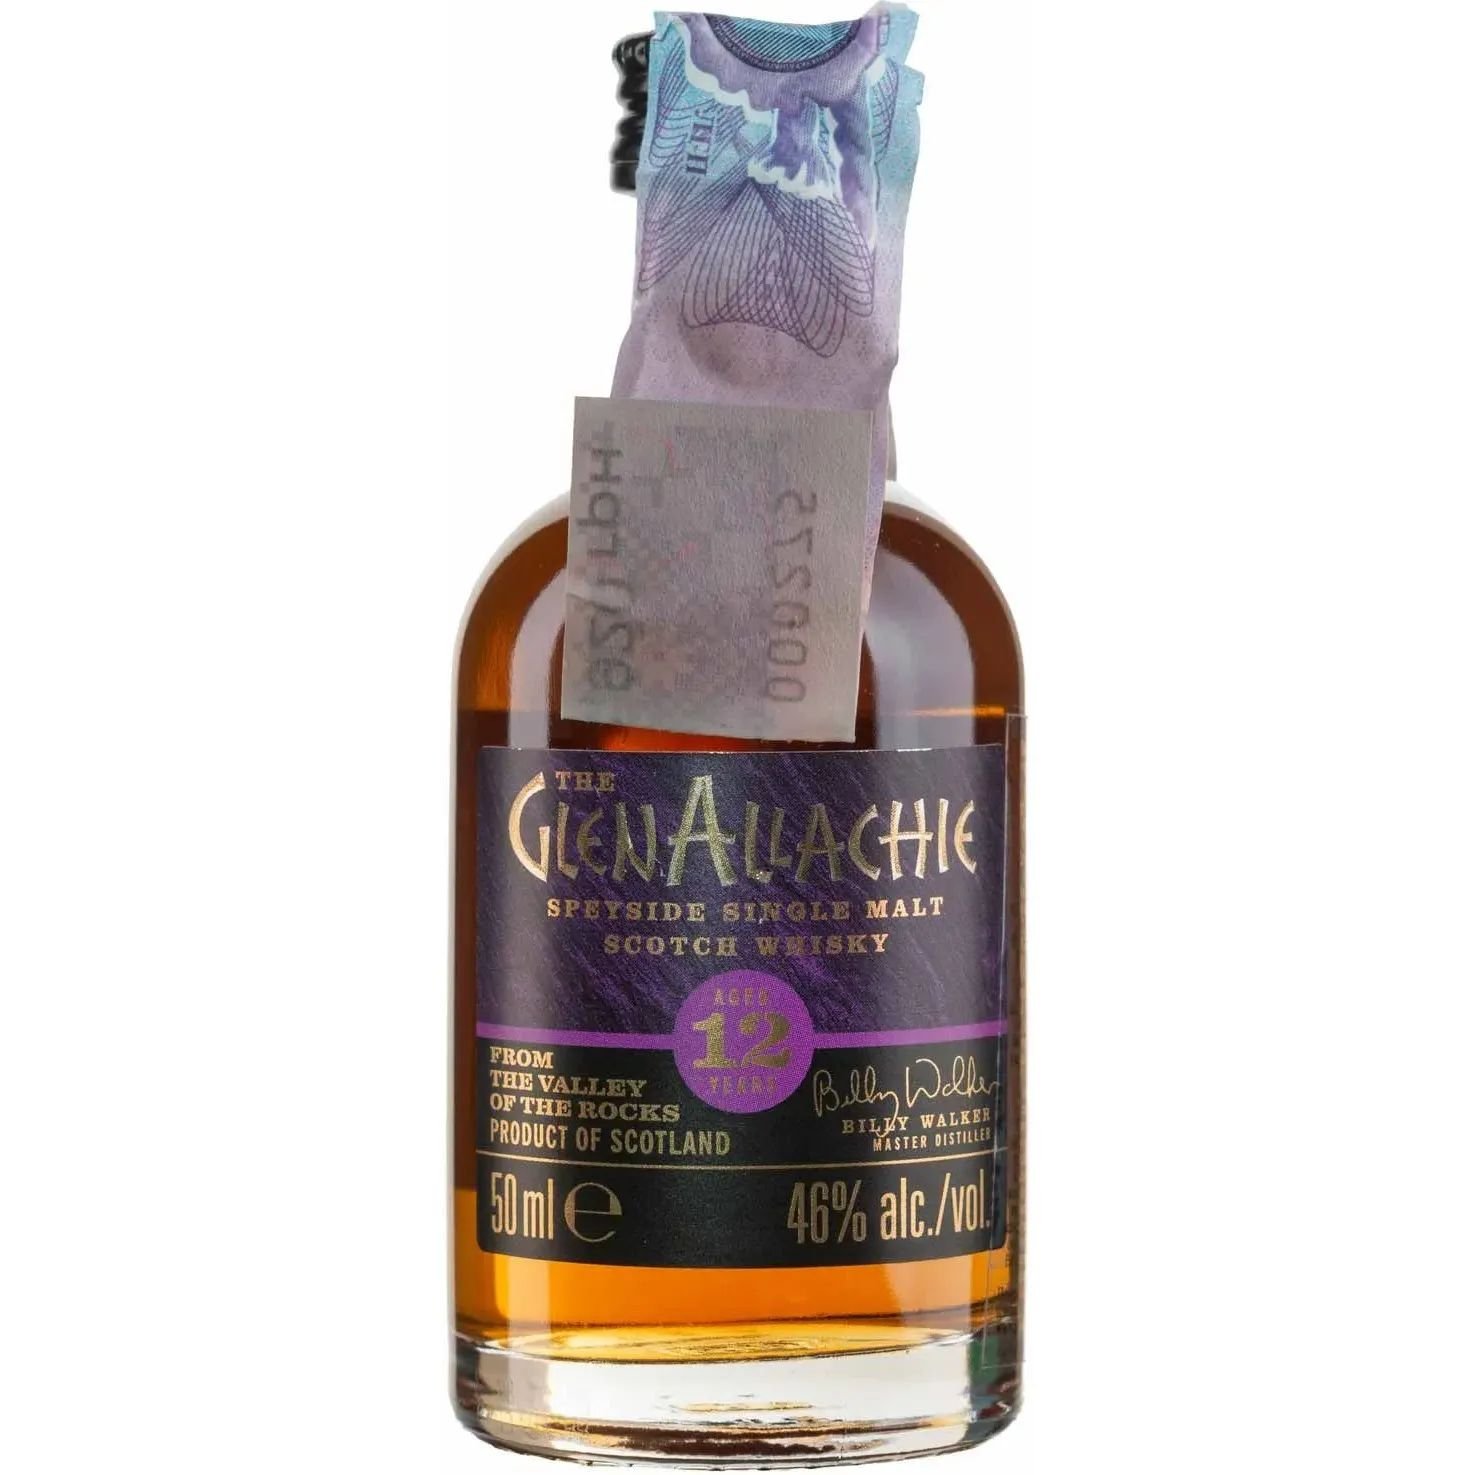 Віскі GlenAllachie 12yo Single Malt Scotch Whisky 46% 0.05 л - фото 1